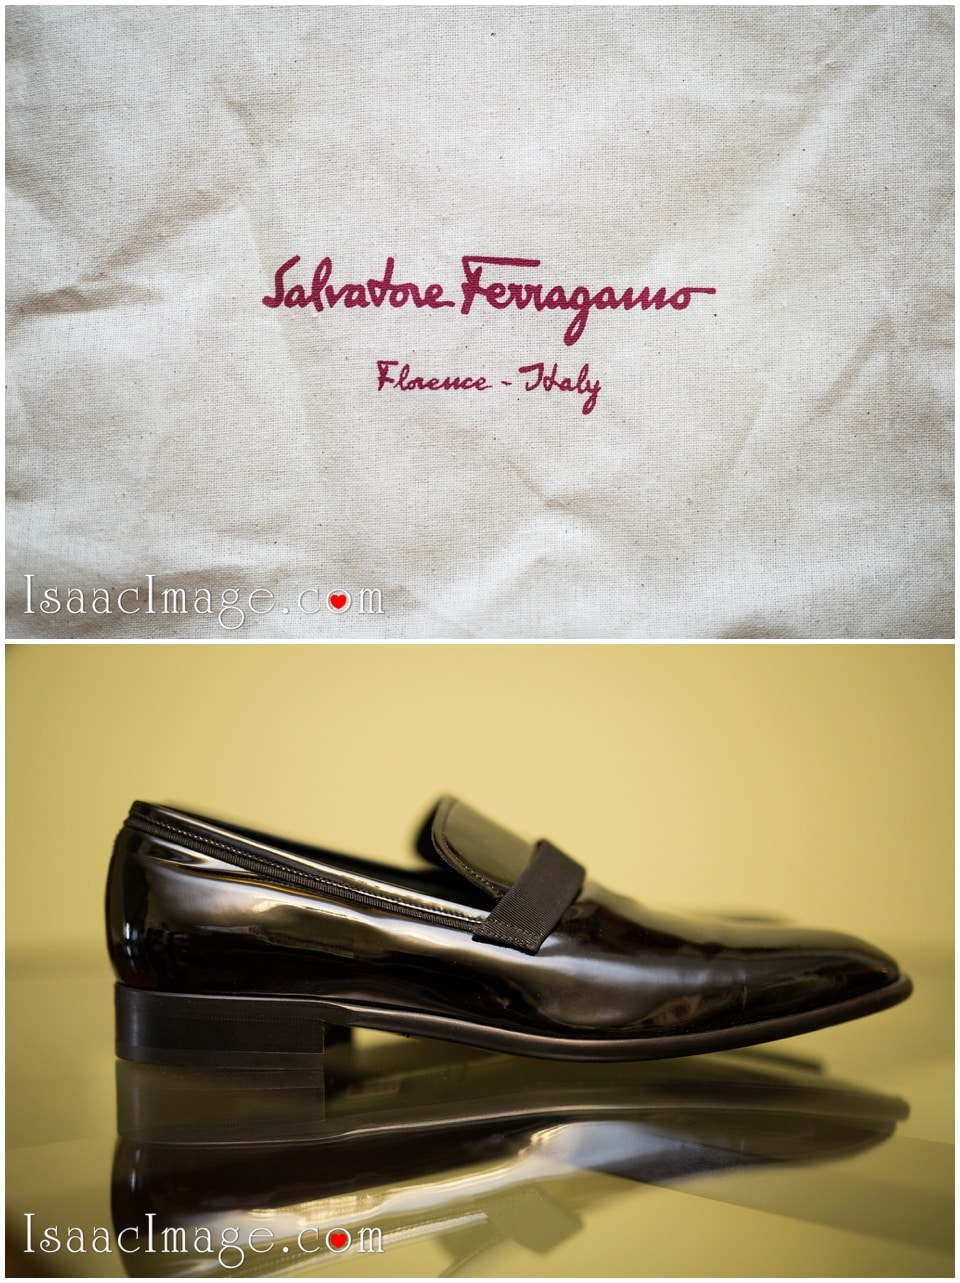 Salvatore Ferragamo Groom's shoes